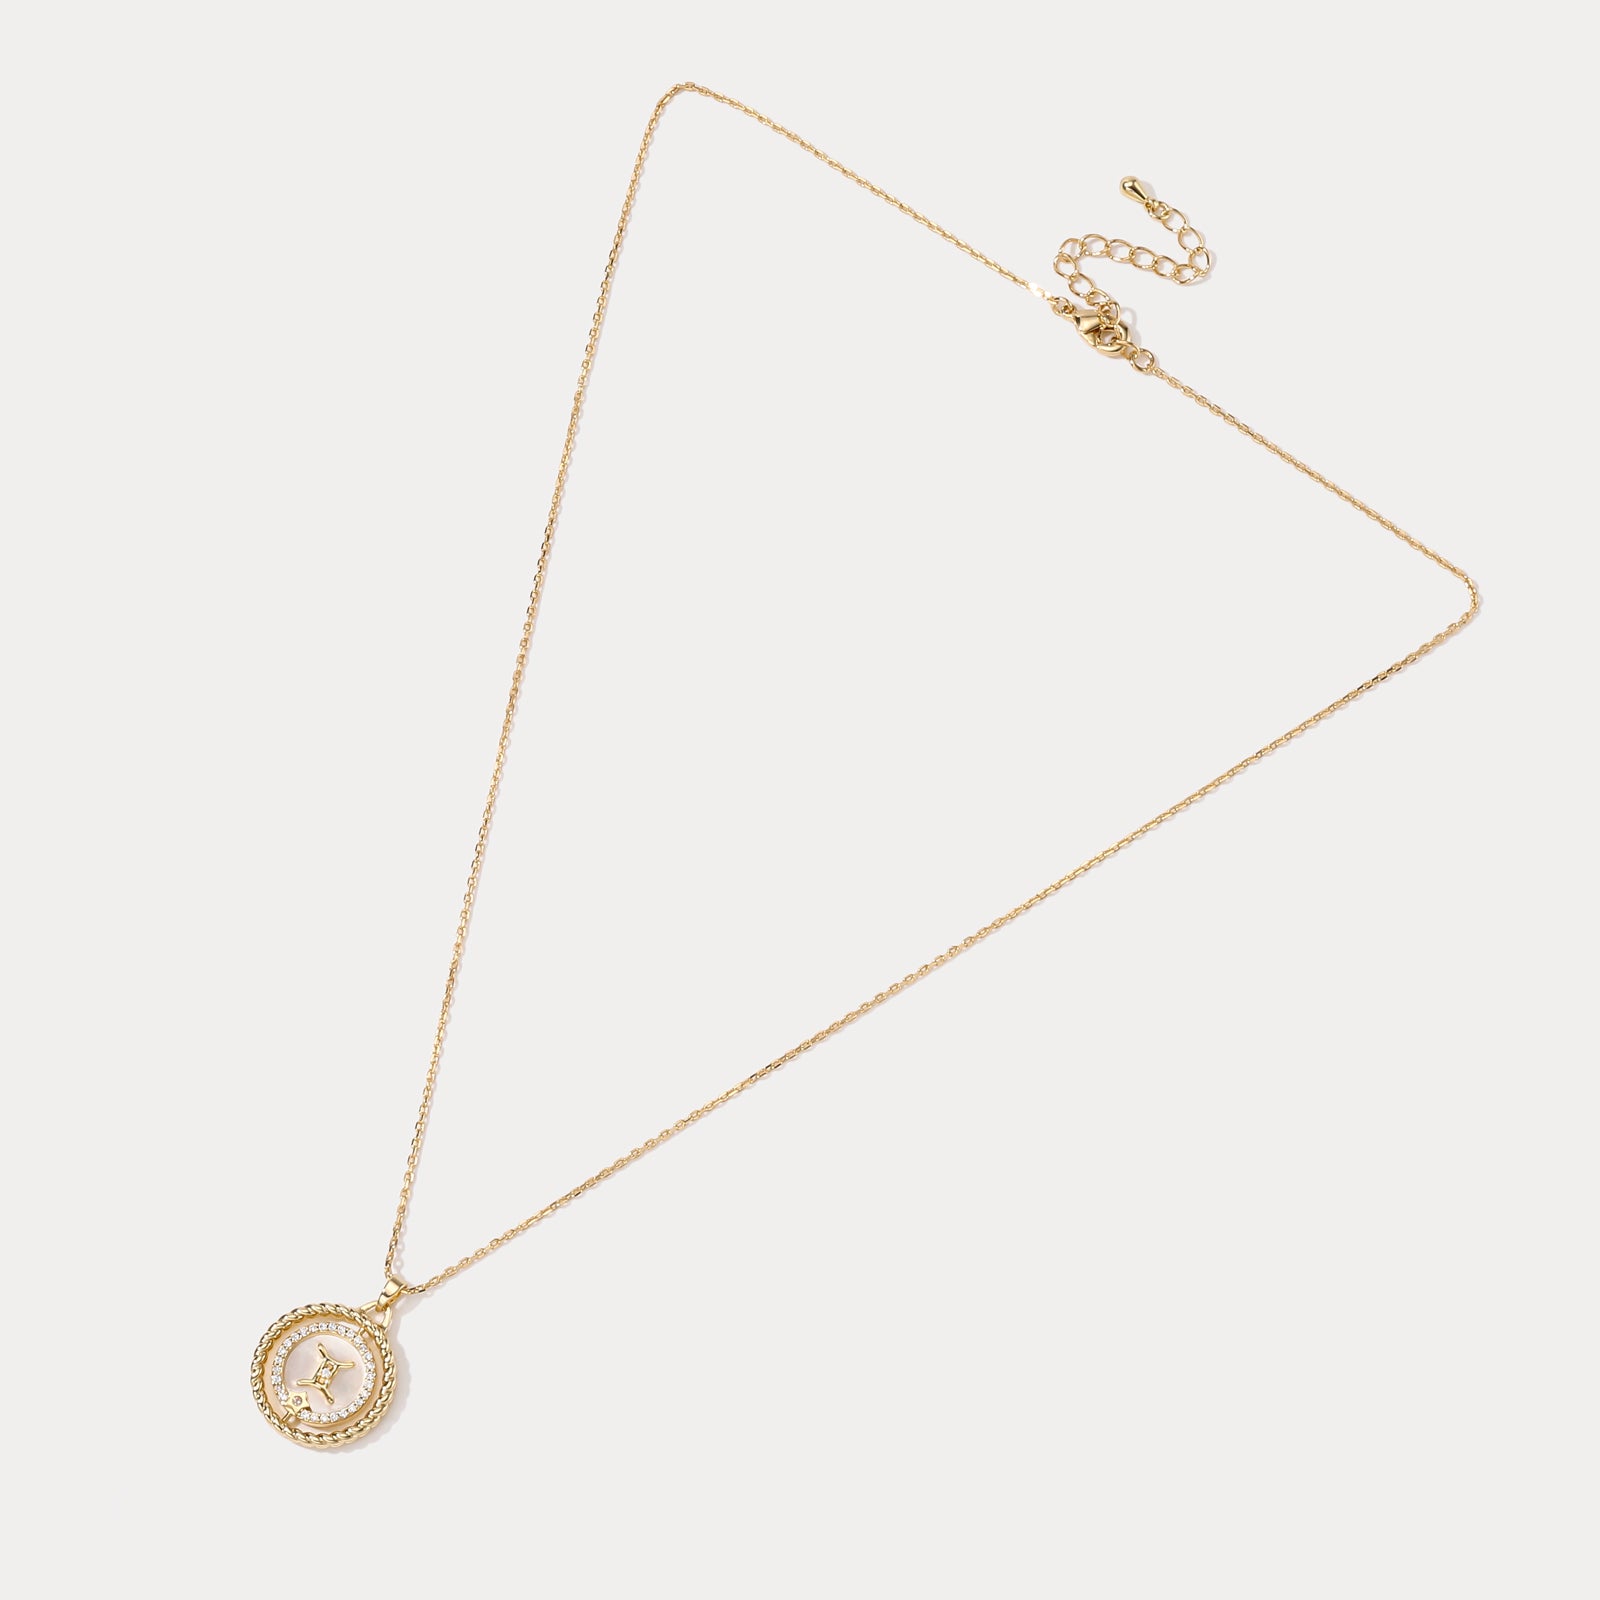 Gemini Galaxy Constellation Coin Pendant Necklace